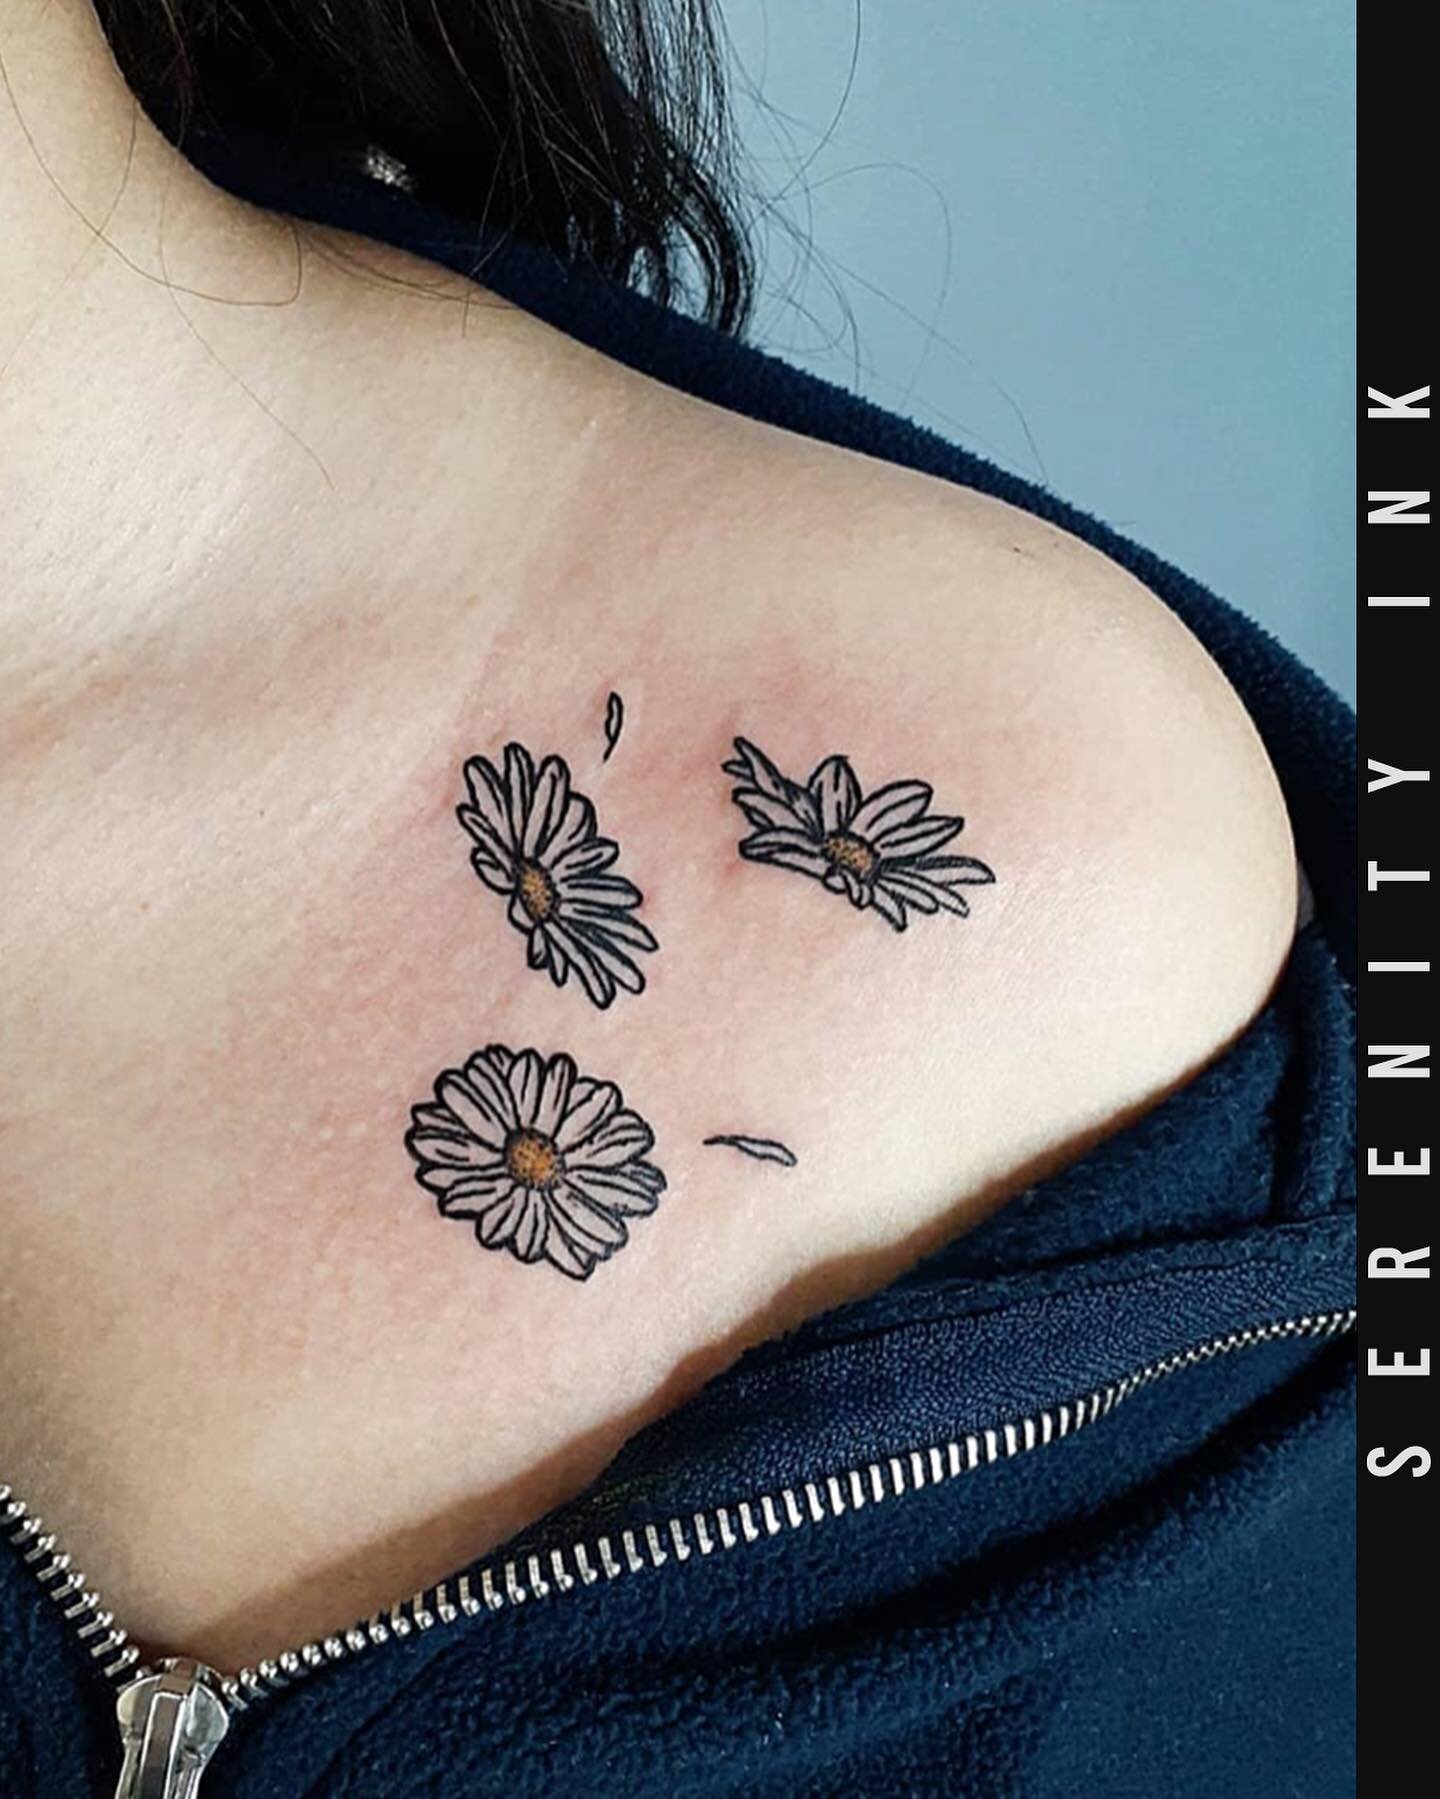 𝟭𝟬/𝗠𝗔𝗥/𝟮𝟬𝟮𝟭
&bull;
Artist: @myashleyb04
&bull;
#daisies #flowers #design #idea #tattooidea #tattoolife #tattoodaily #tatuajesmujeres #tattoedgirls #inkedgirls #ink #tattoos_of_instagram #serenityink #tattoosofinstagram #tattoos #simpletattoo